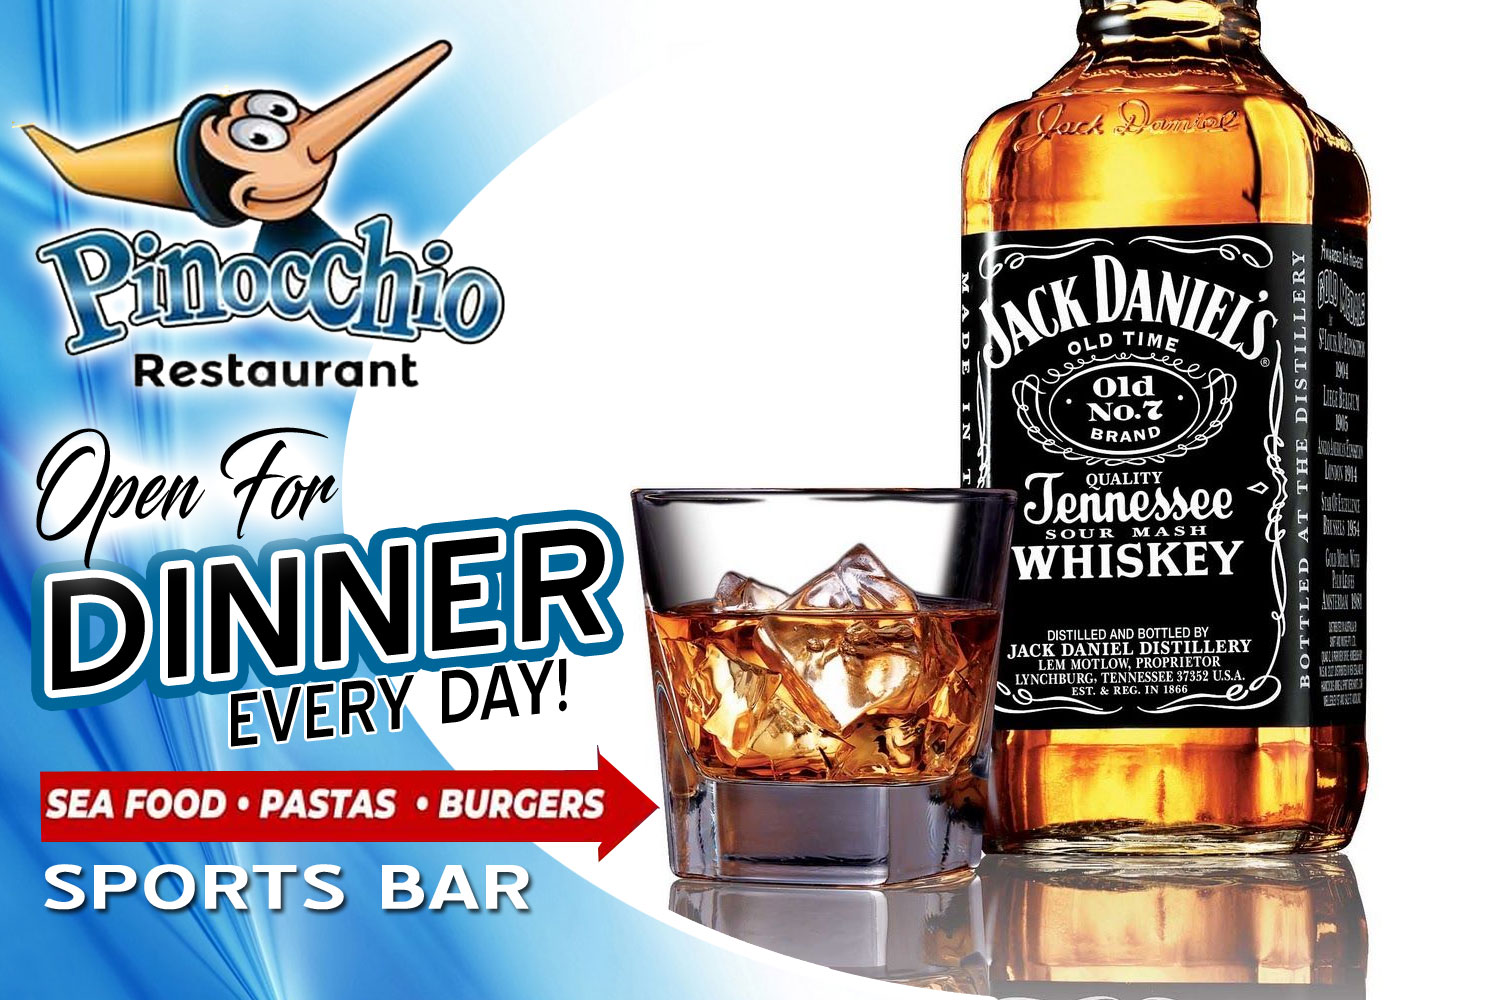 Come enjoy a Jack Daniels